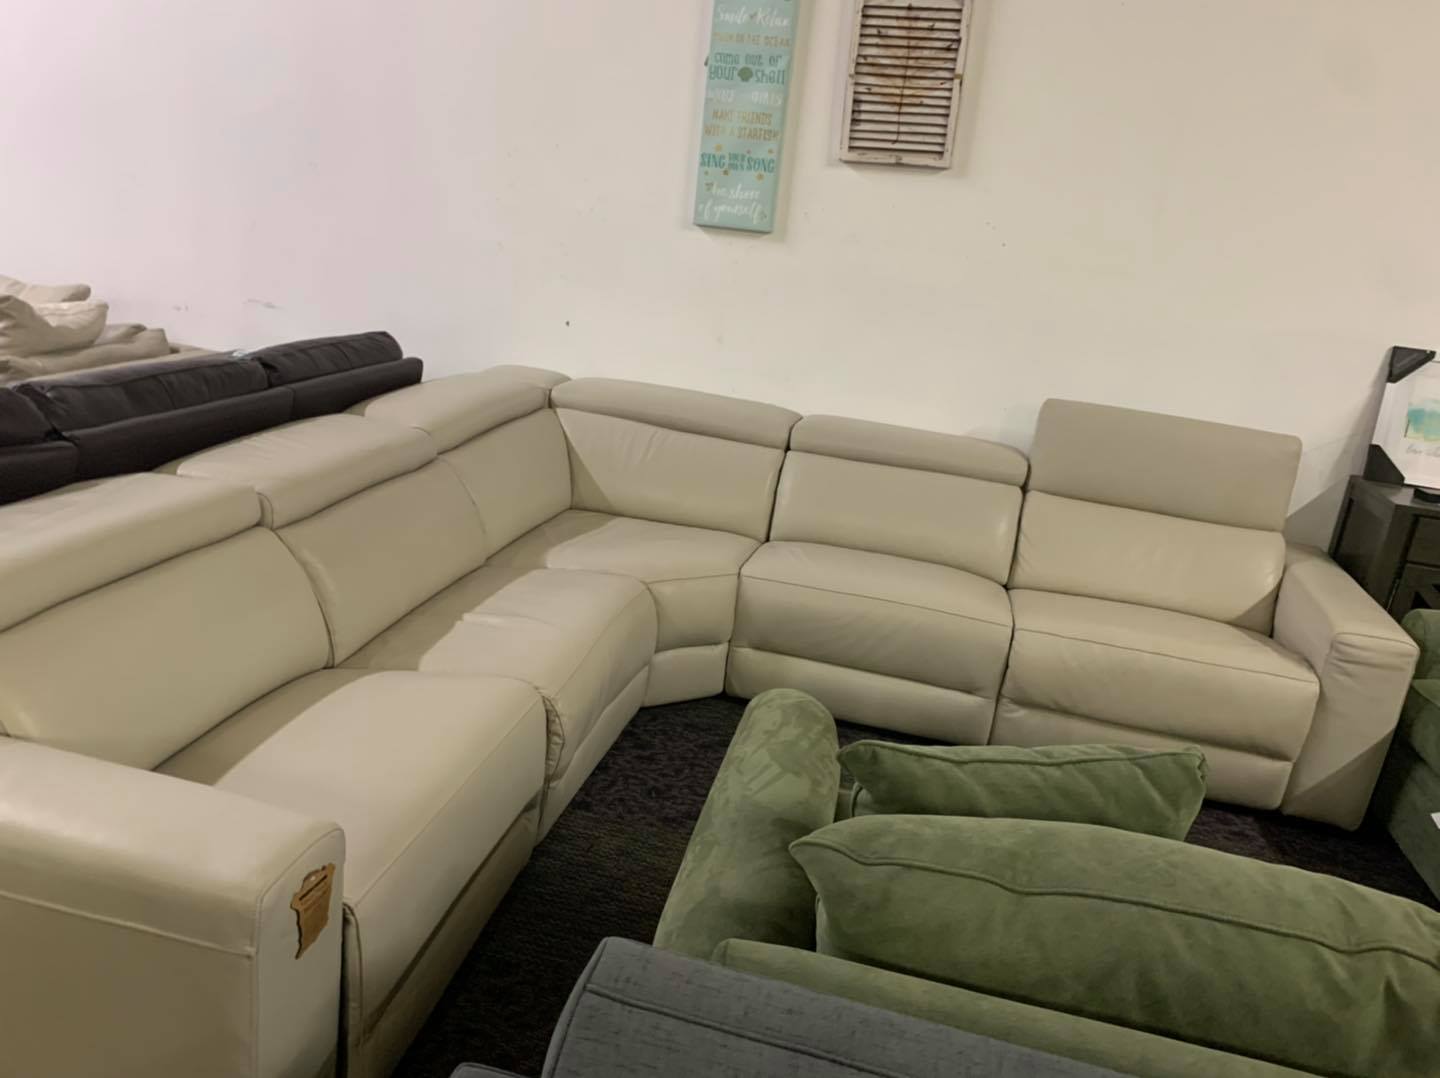 nevio 6-pc leather sectional sofa reviews